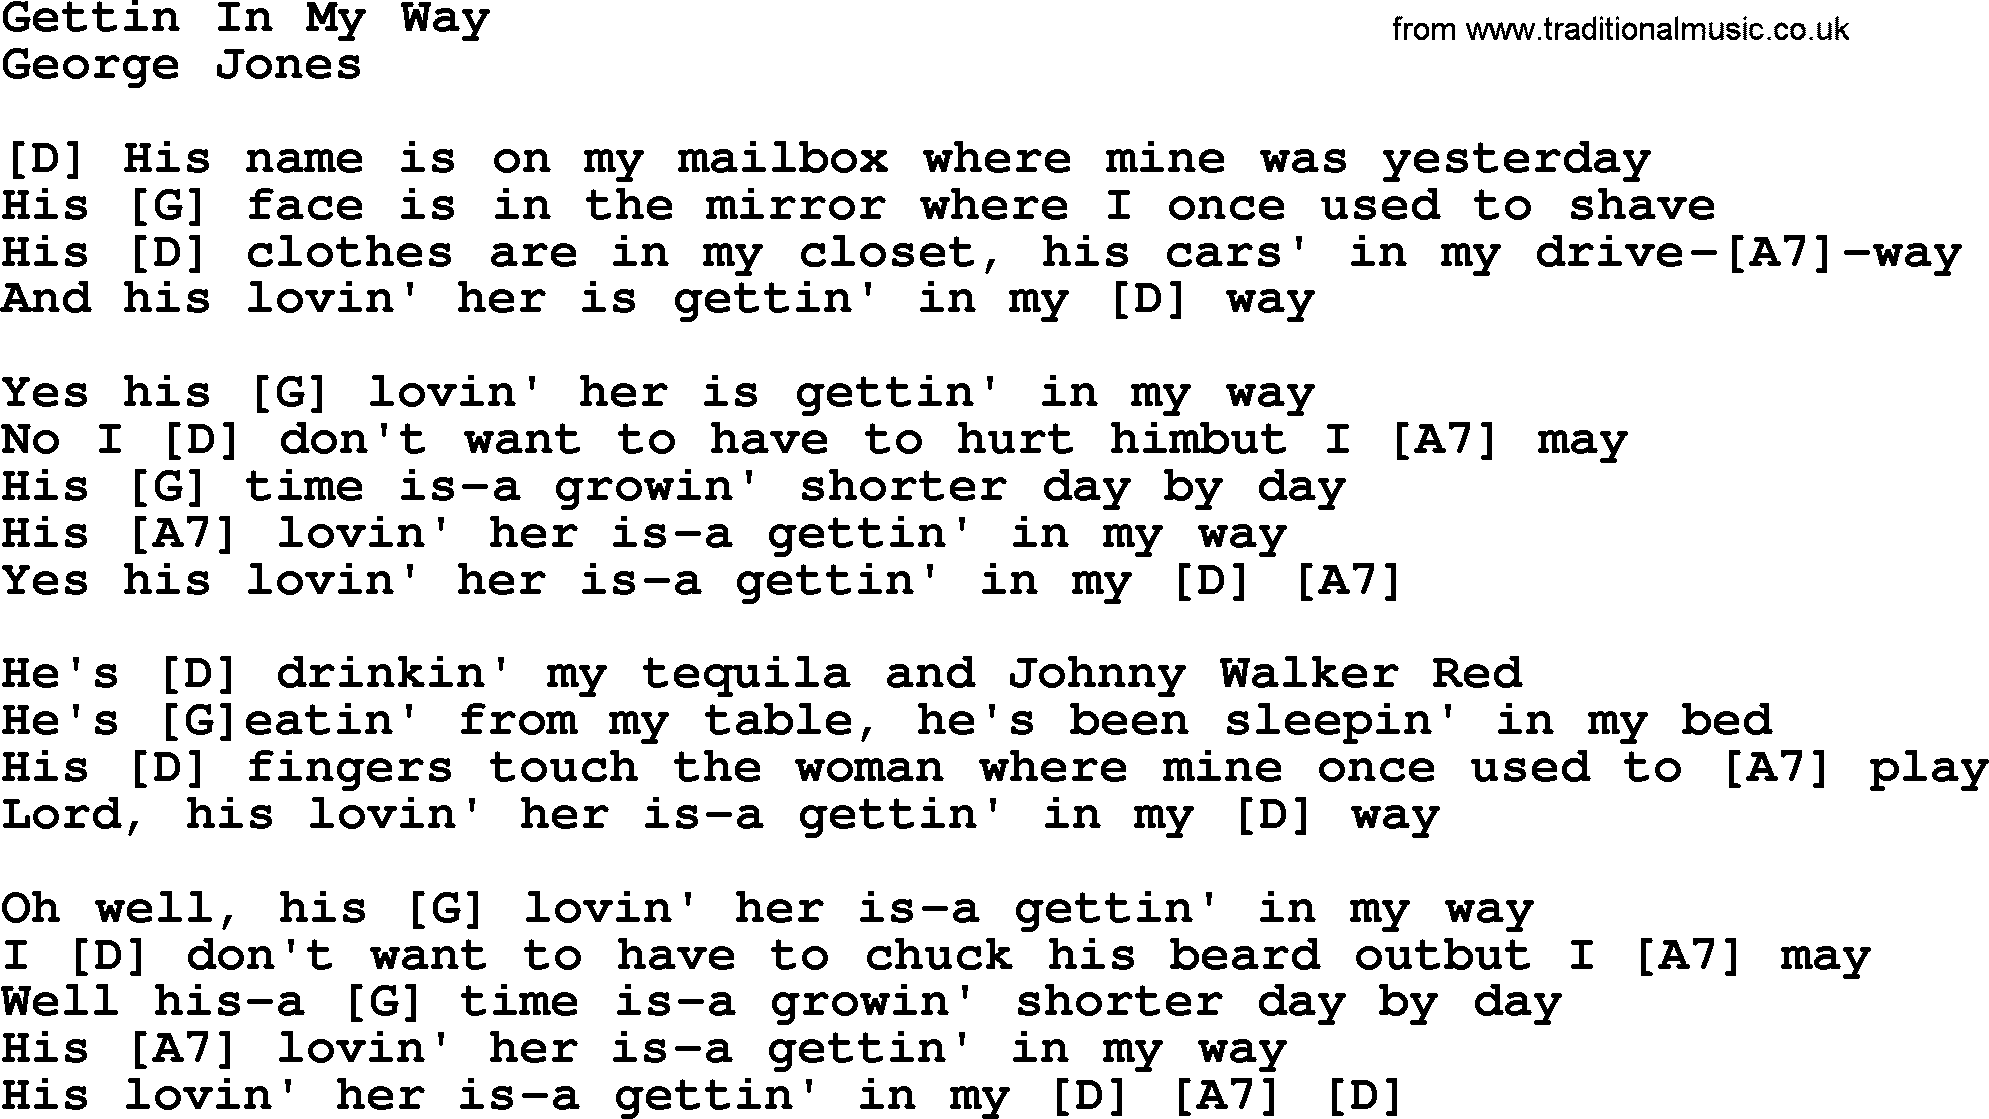 George Jones song: Gettin In My Way, lyrics and chords